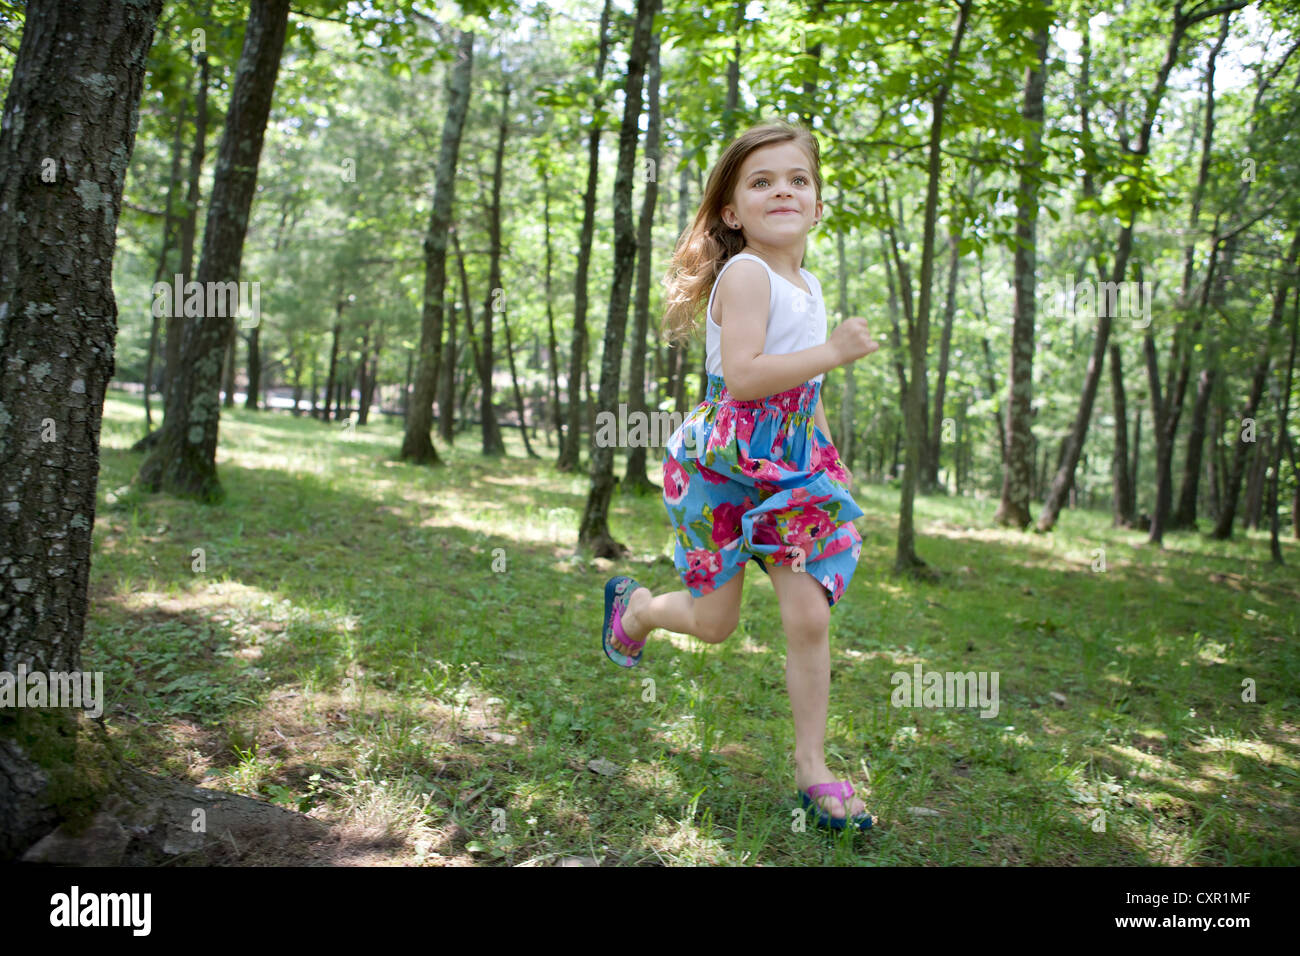 Girl running in forest Stock Photo